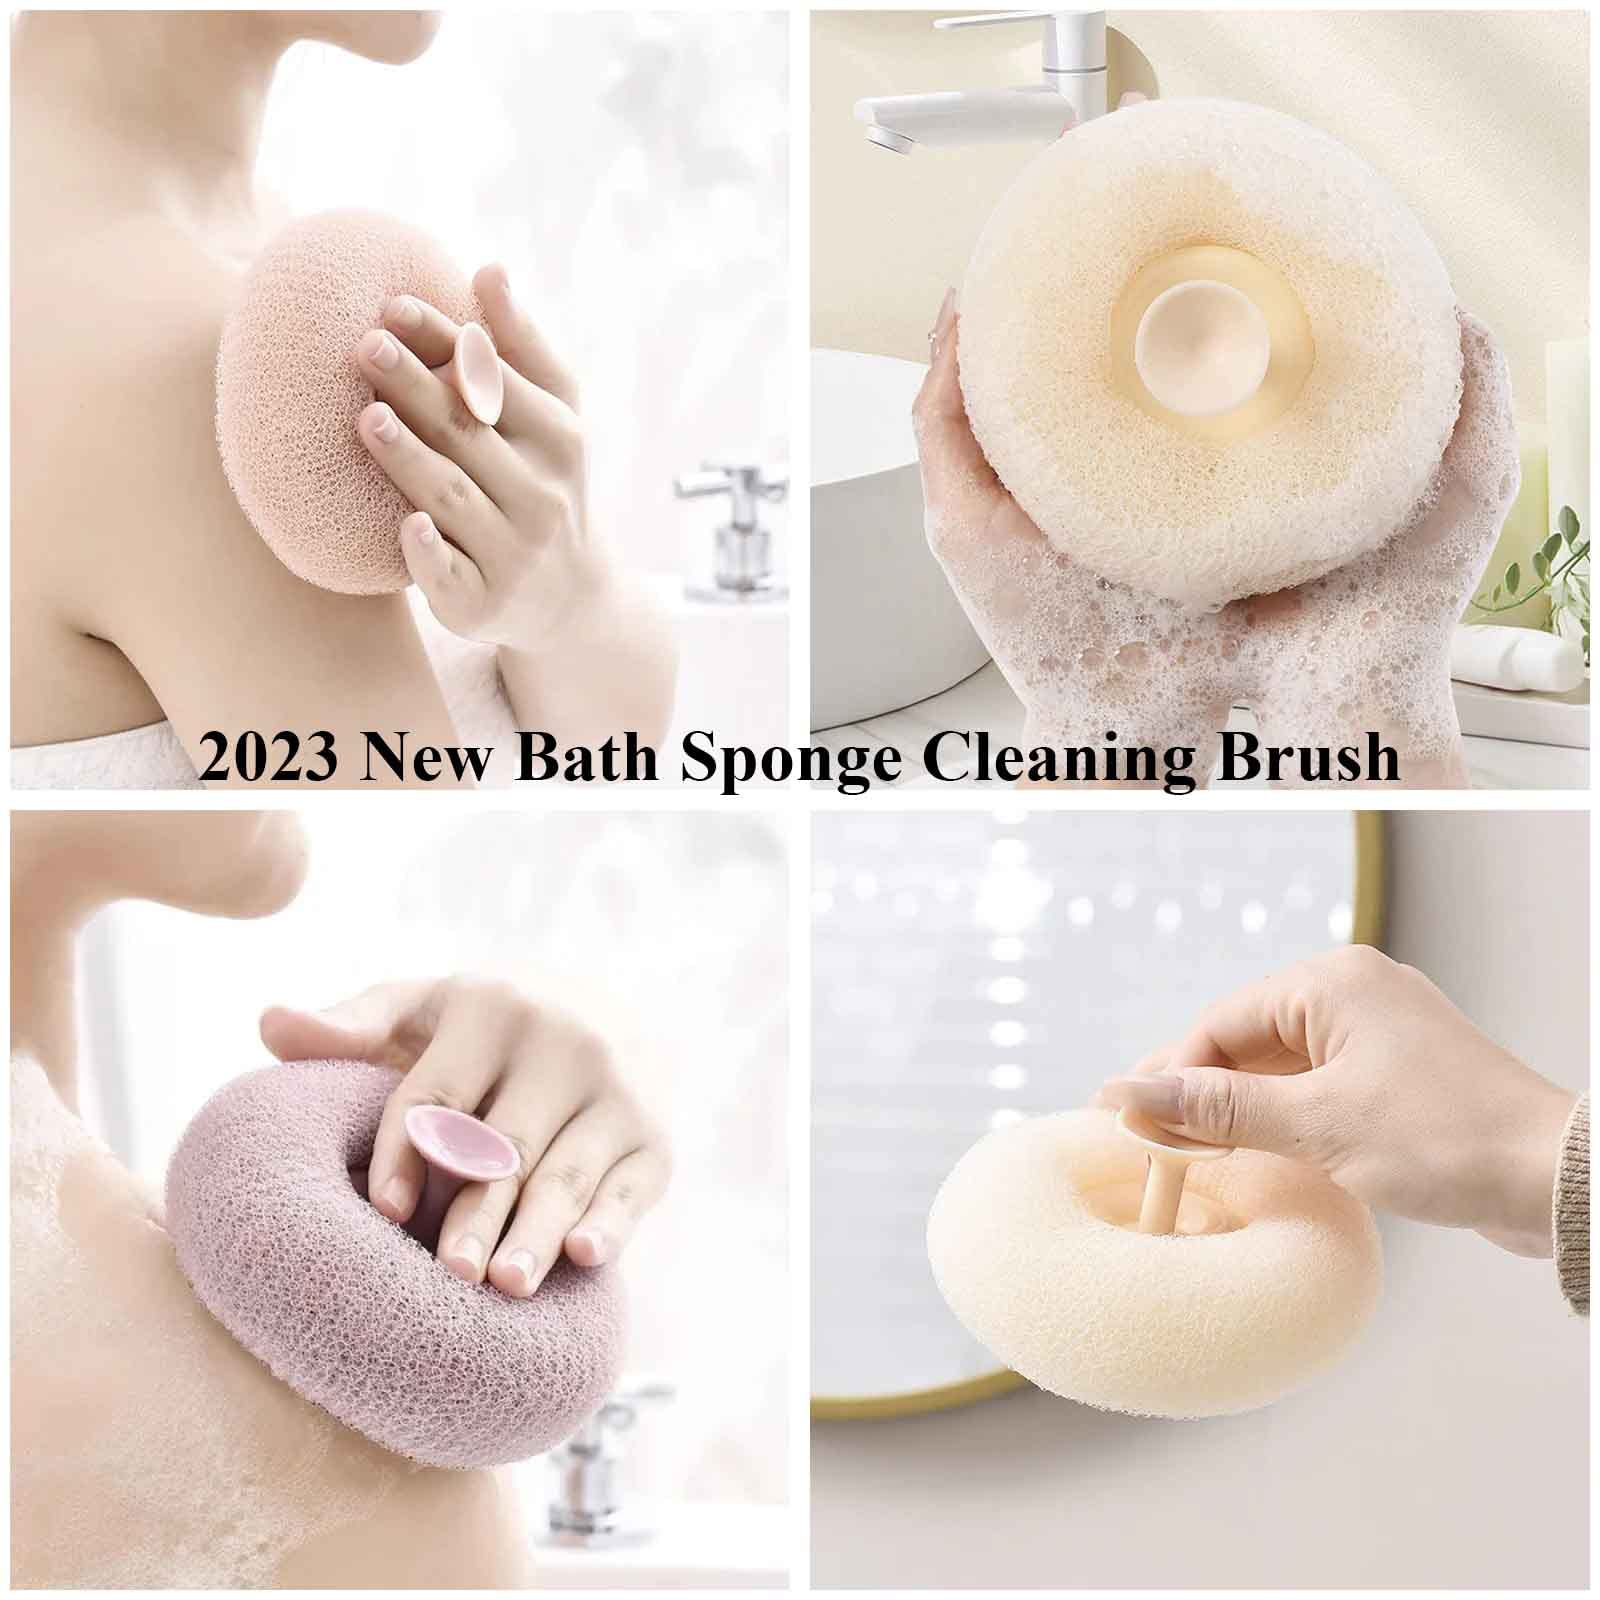 2023 New Bath Sponge Cleaning Brush, Super Soft Exfoliating Bath Sponge Cleaning Brush for Shower Women, Massage Bath Body Exfoliating Sponge for Adults Children and Pregnant Women (4PCS)